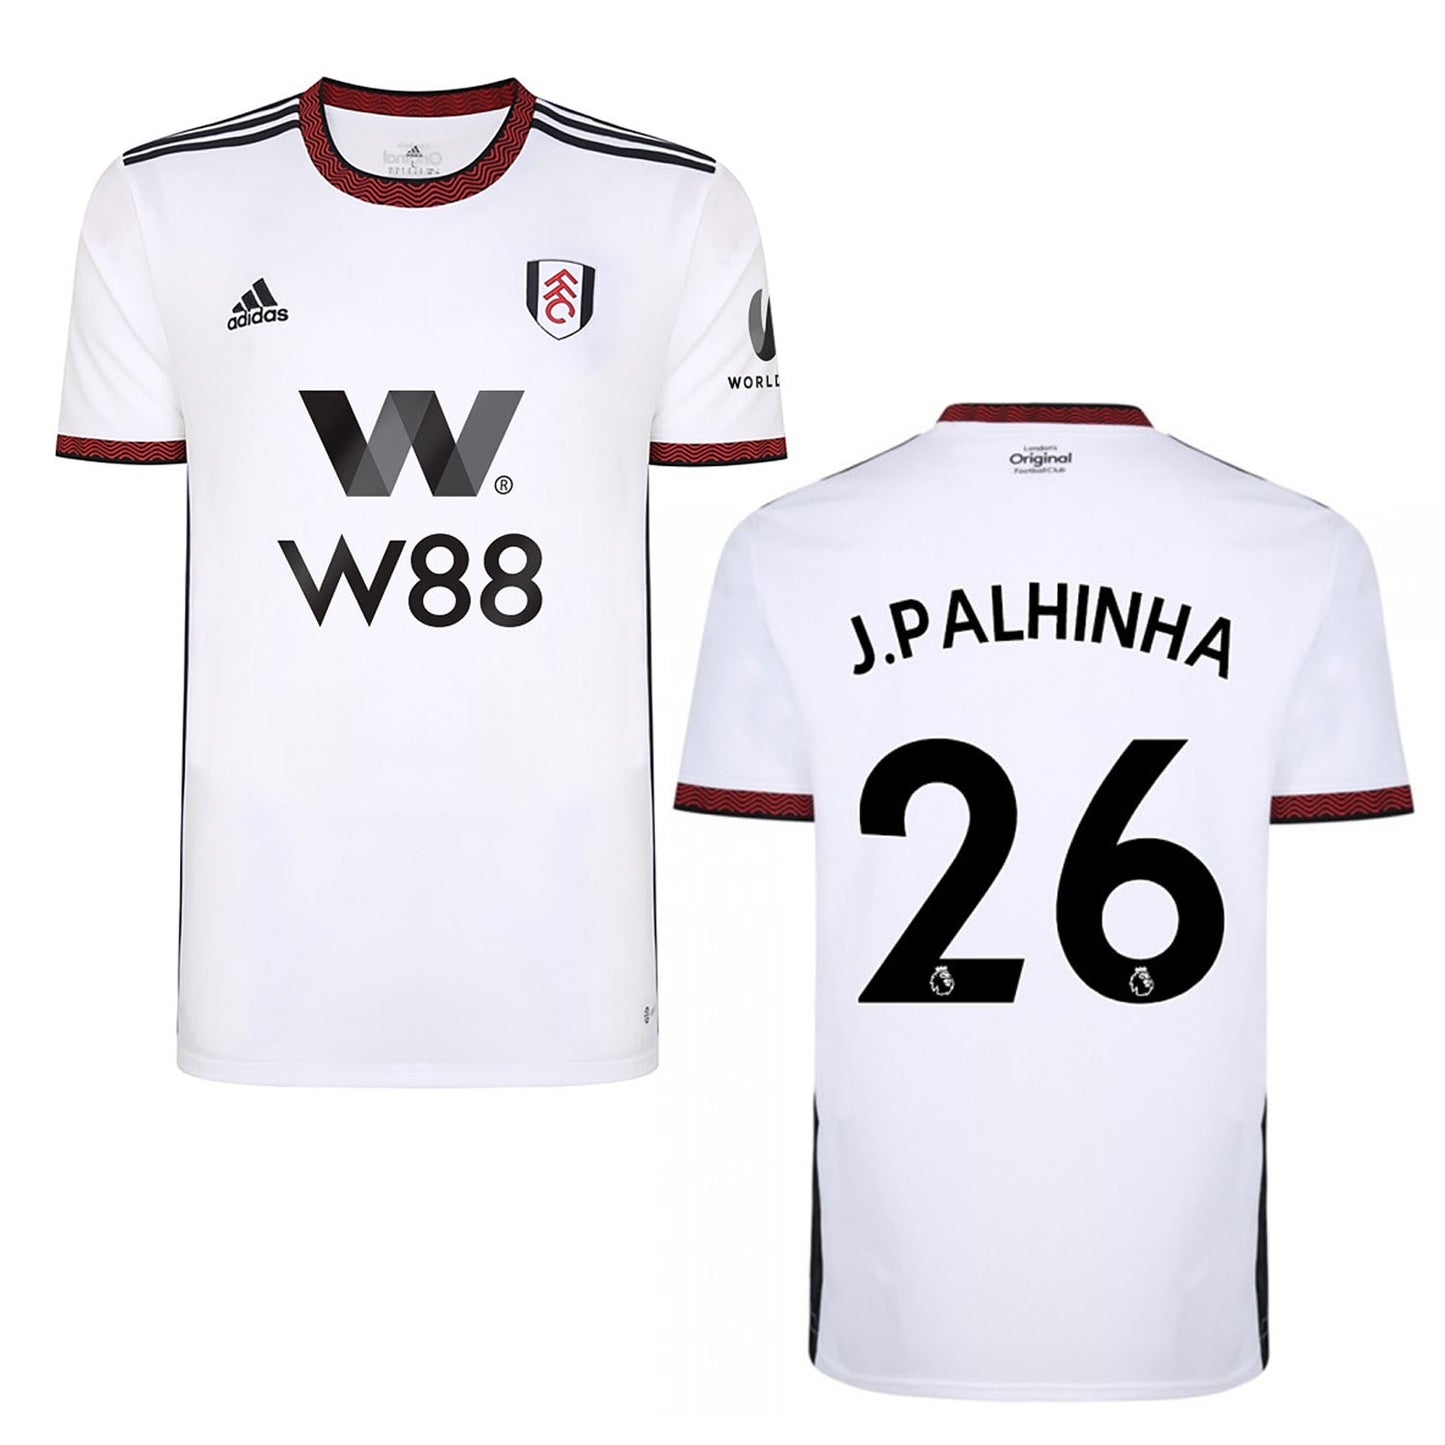 Joao Palhinha Fulham 26 Jersey